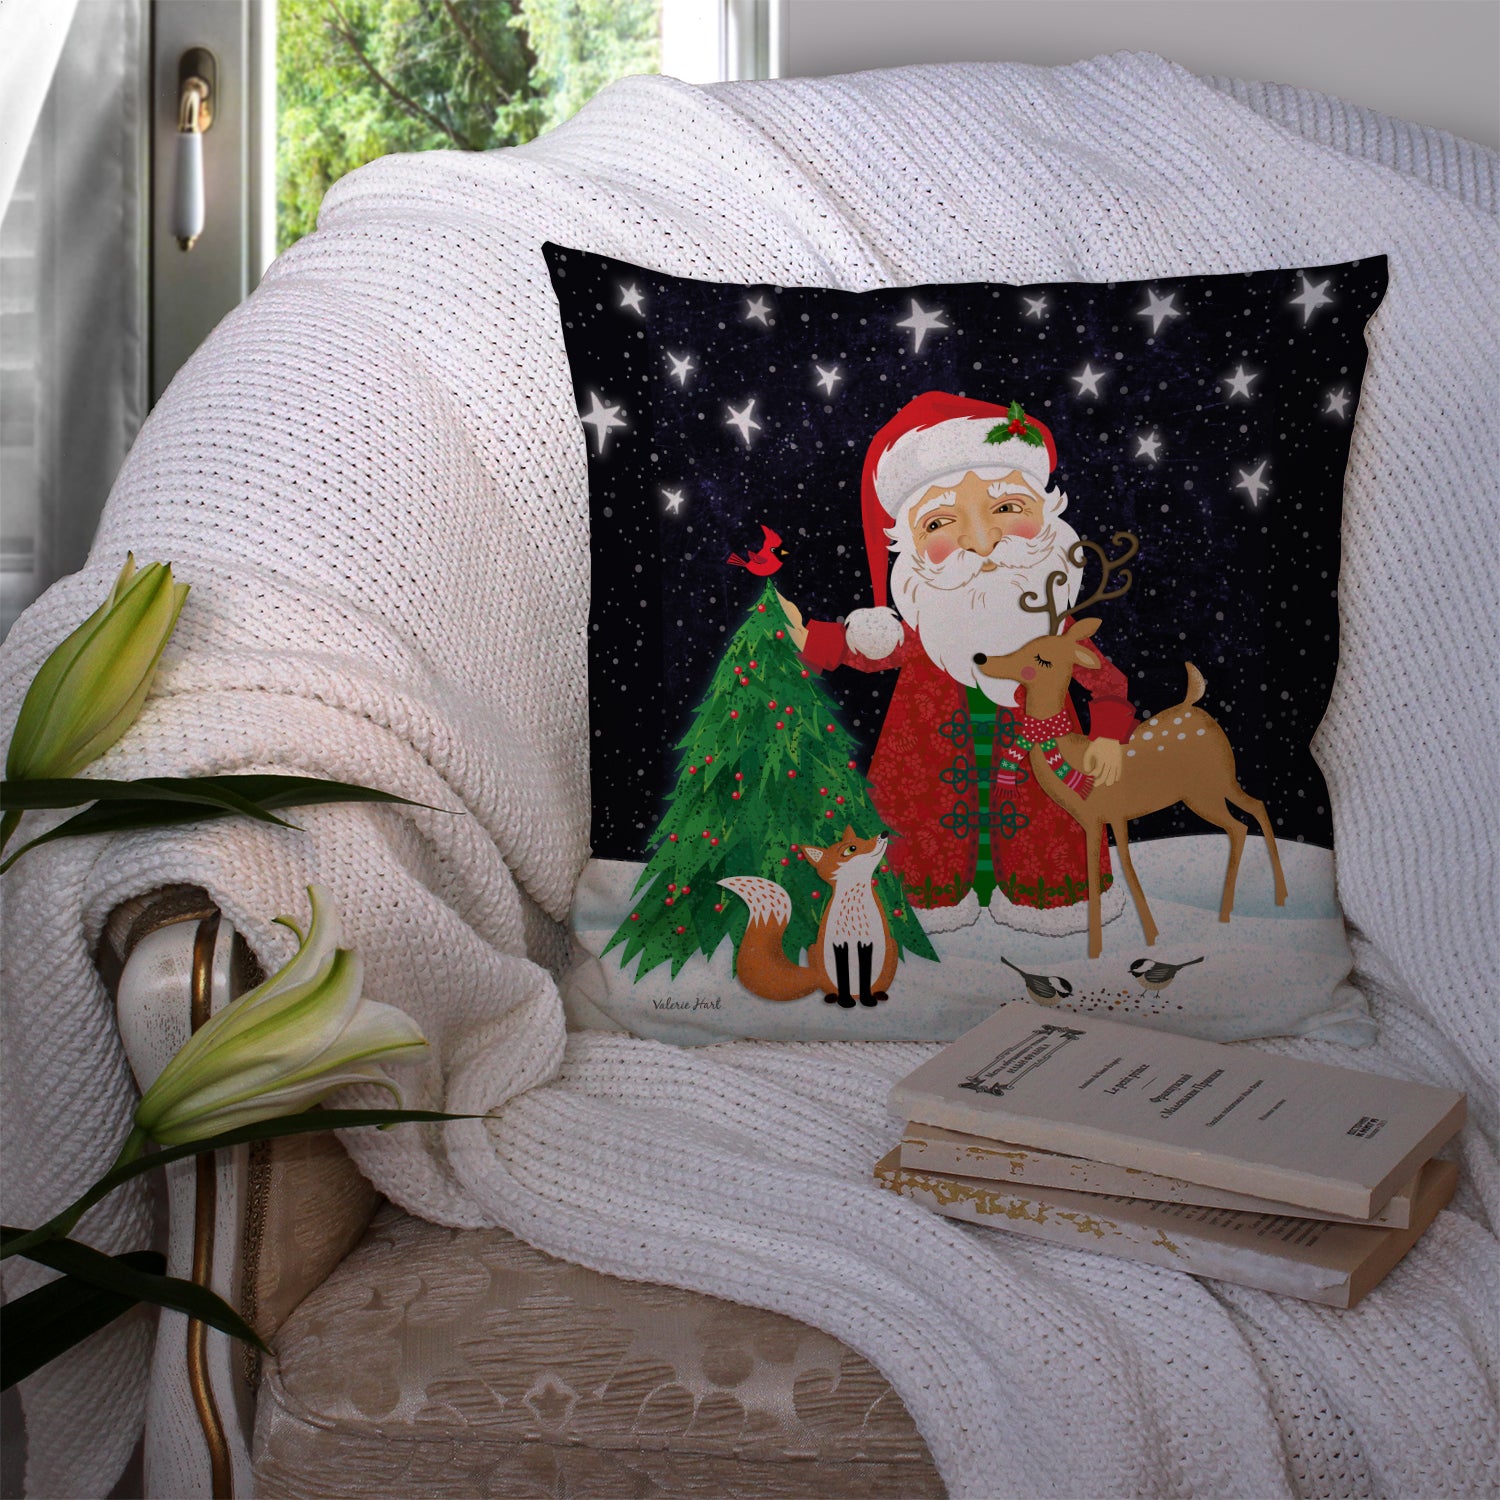 Santa Claus Christmas Fabric Decorative Pillow VHA3033PW1414 - the-store.com